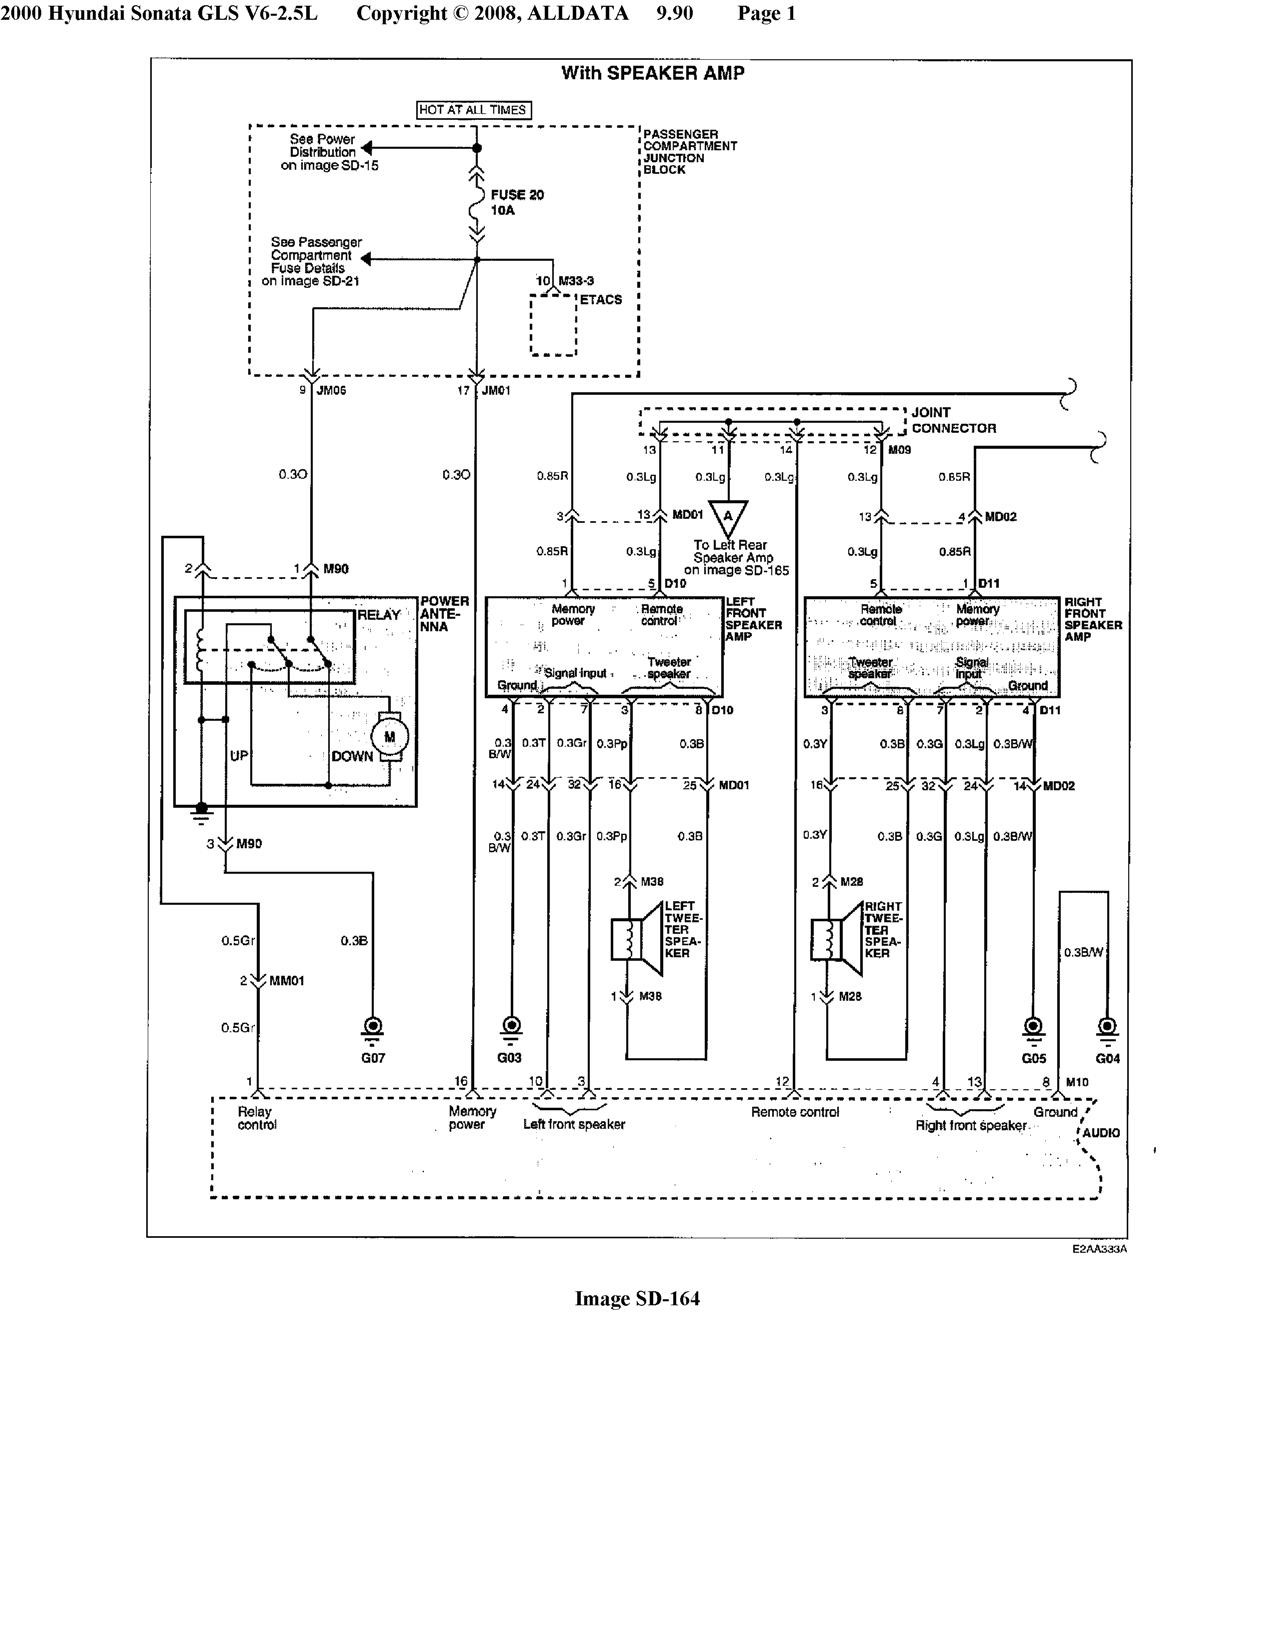 Wiring Diagram PDF: 2002 Hyundai Elantra Headlight Wiring Diagram